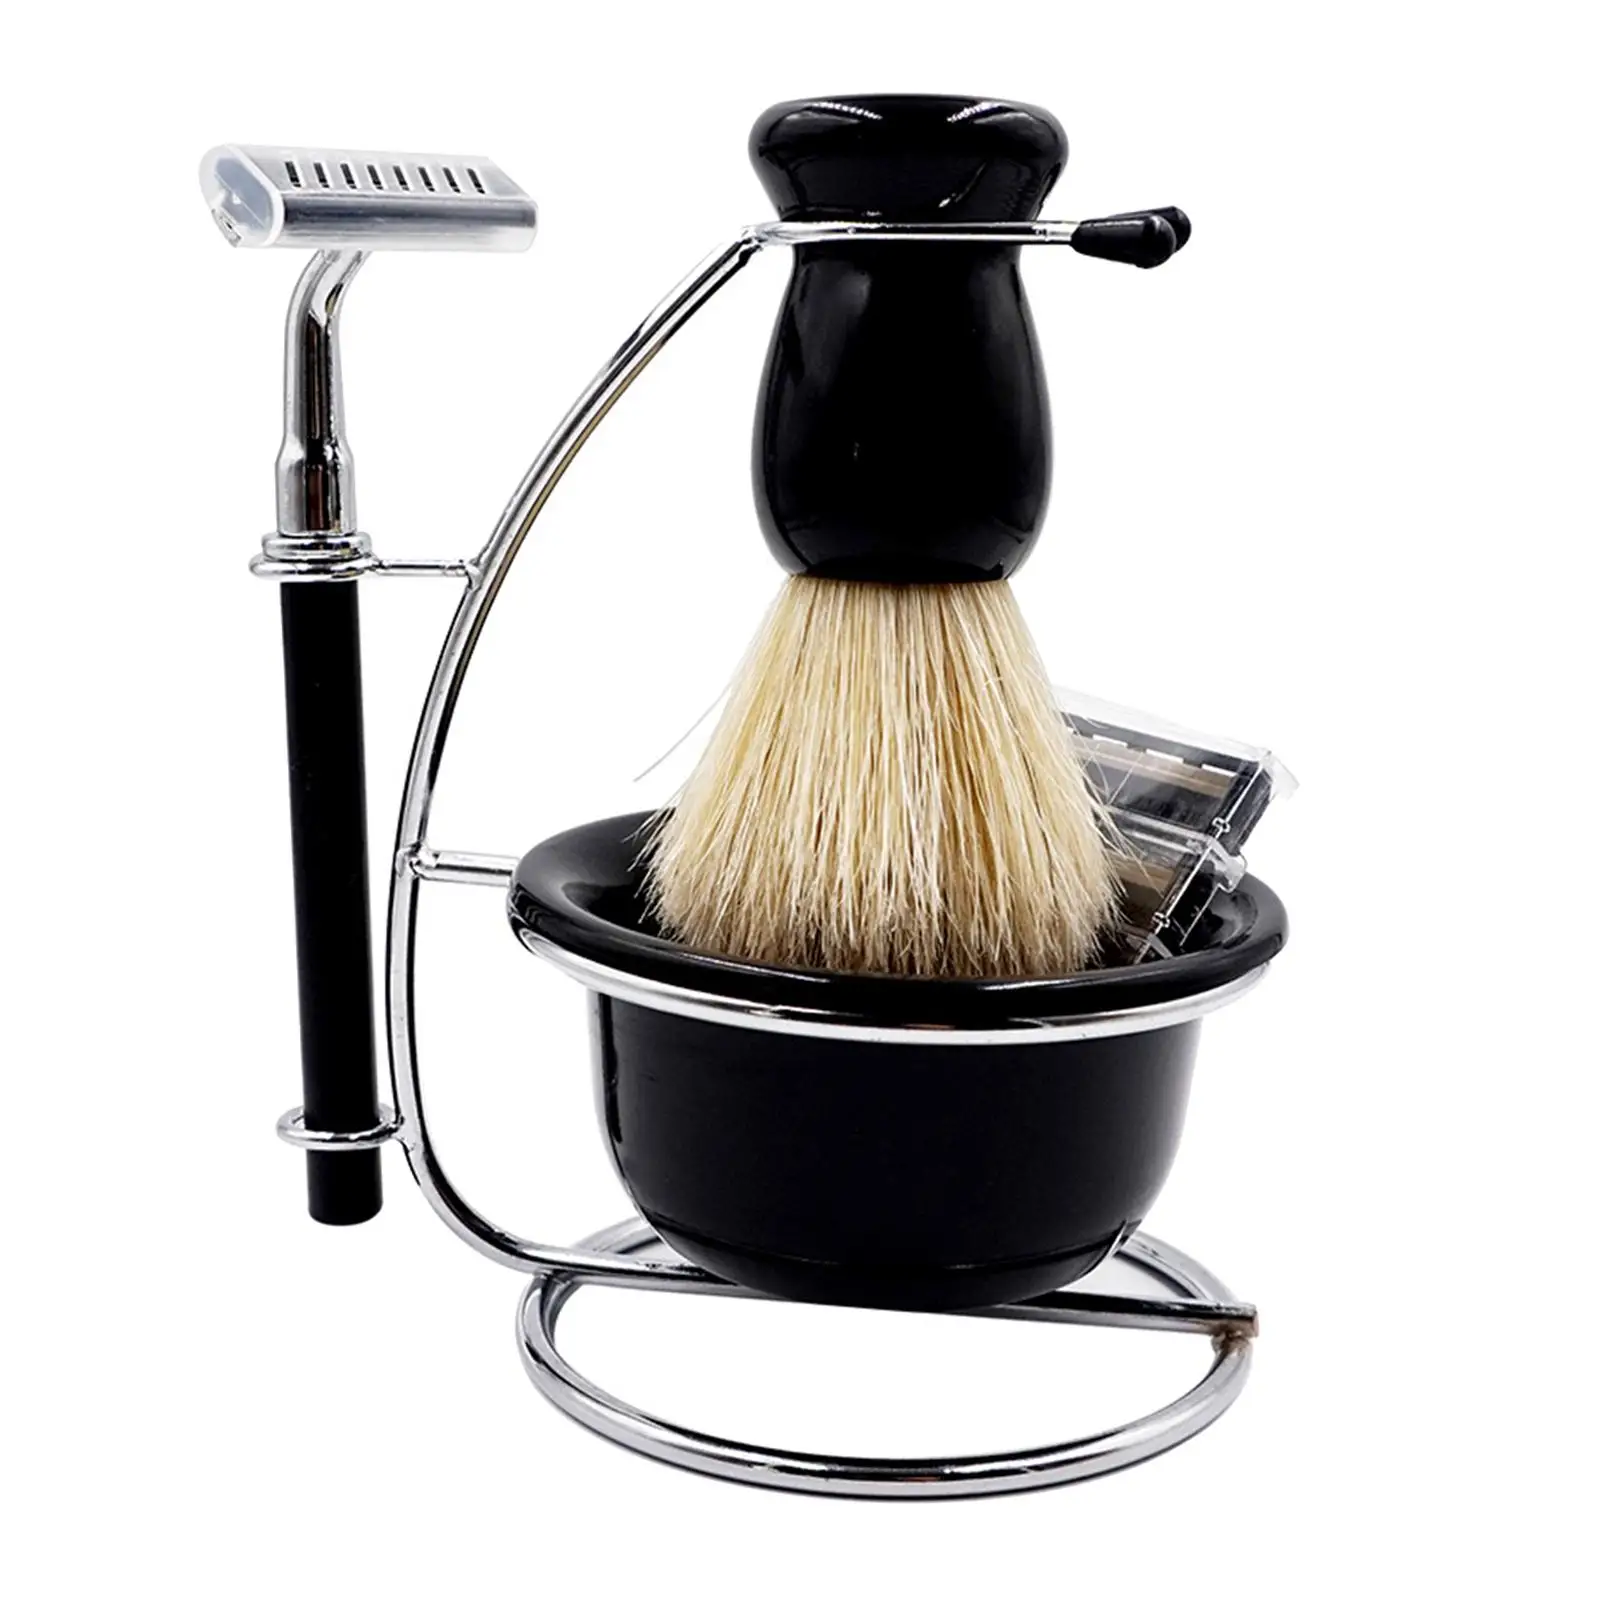 Travel Shaving Kit for Men Manual Stand Brush Bowl Set Elegant Sturdy